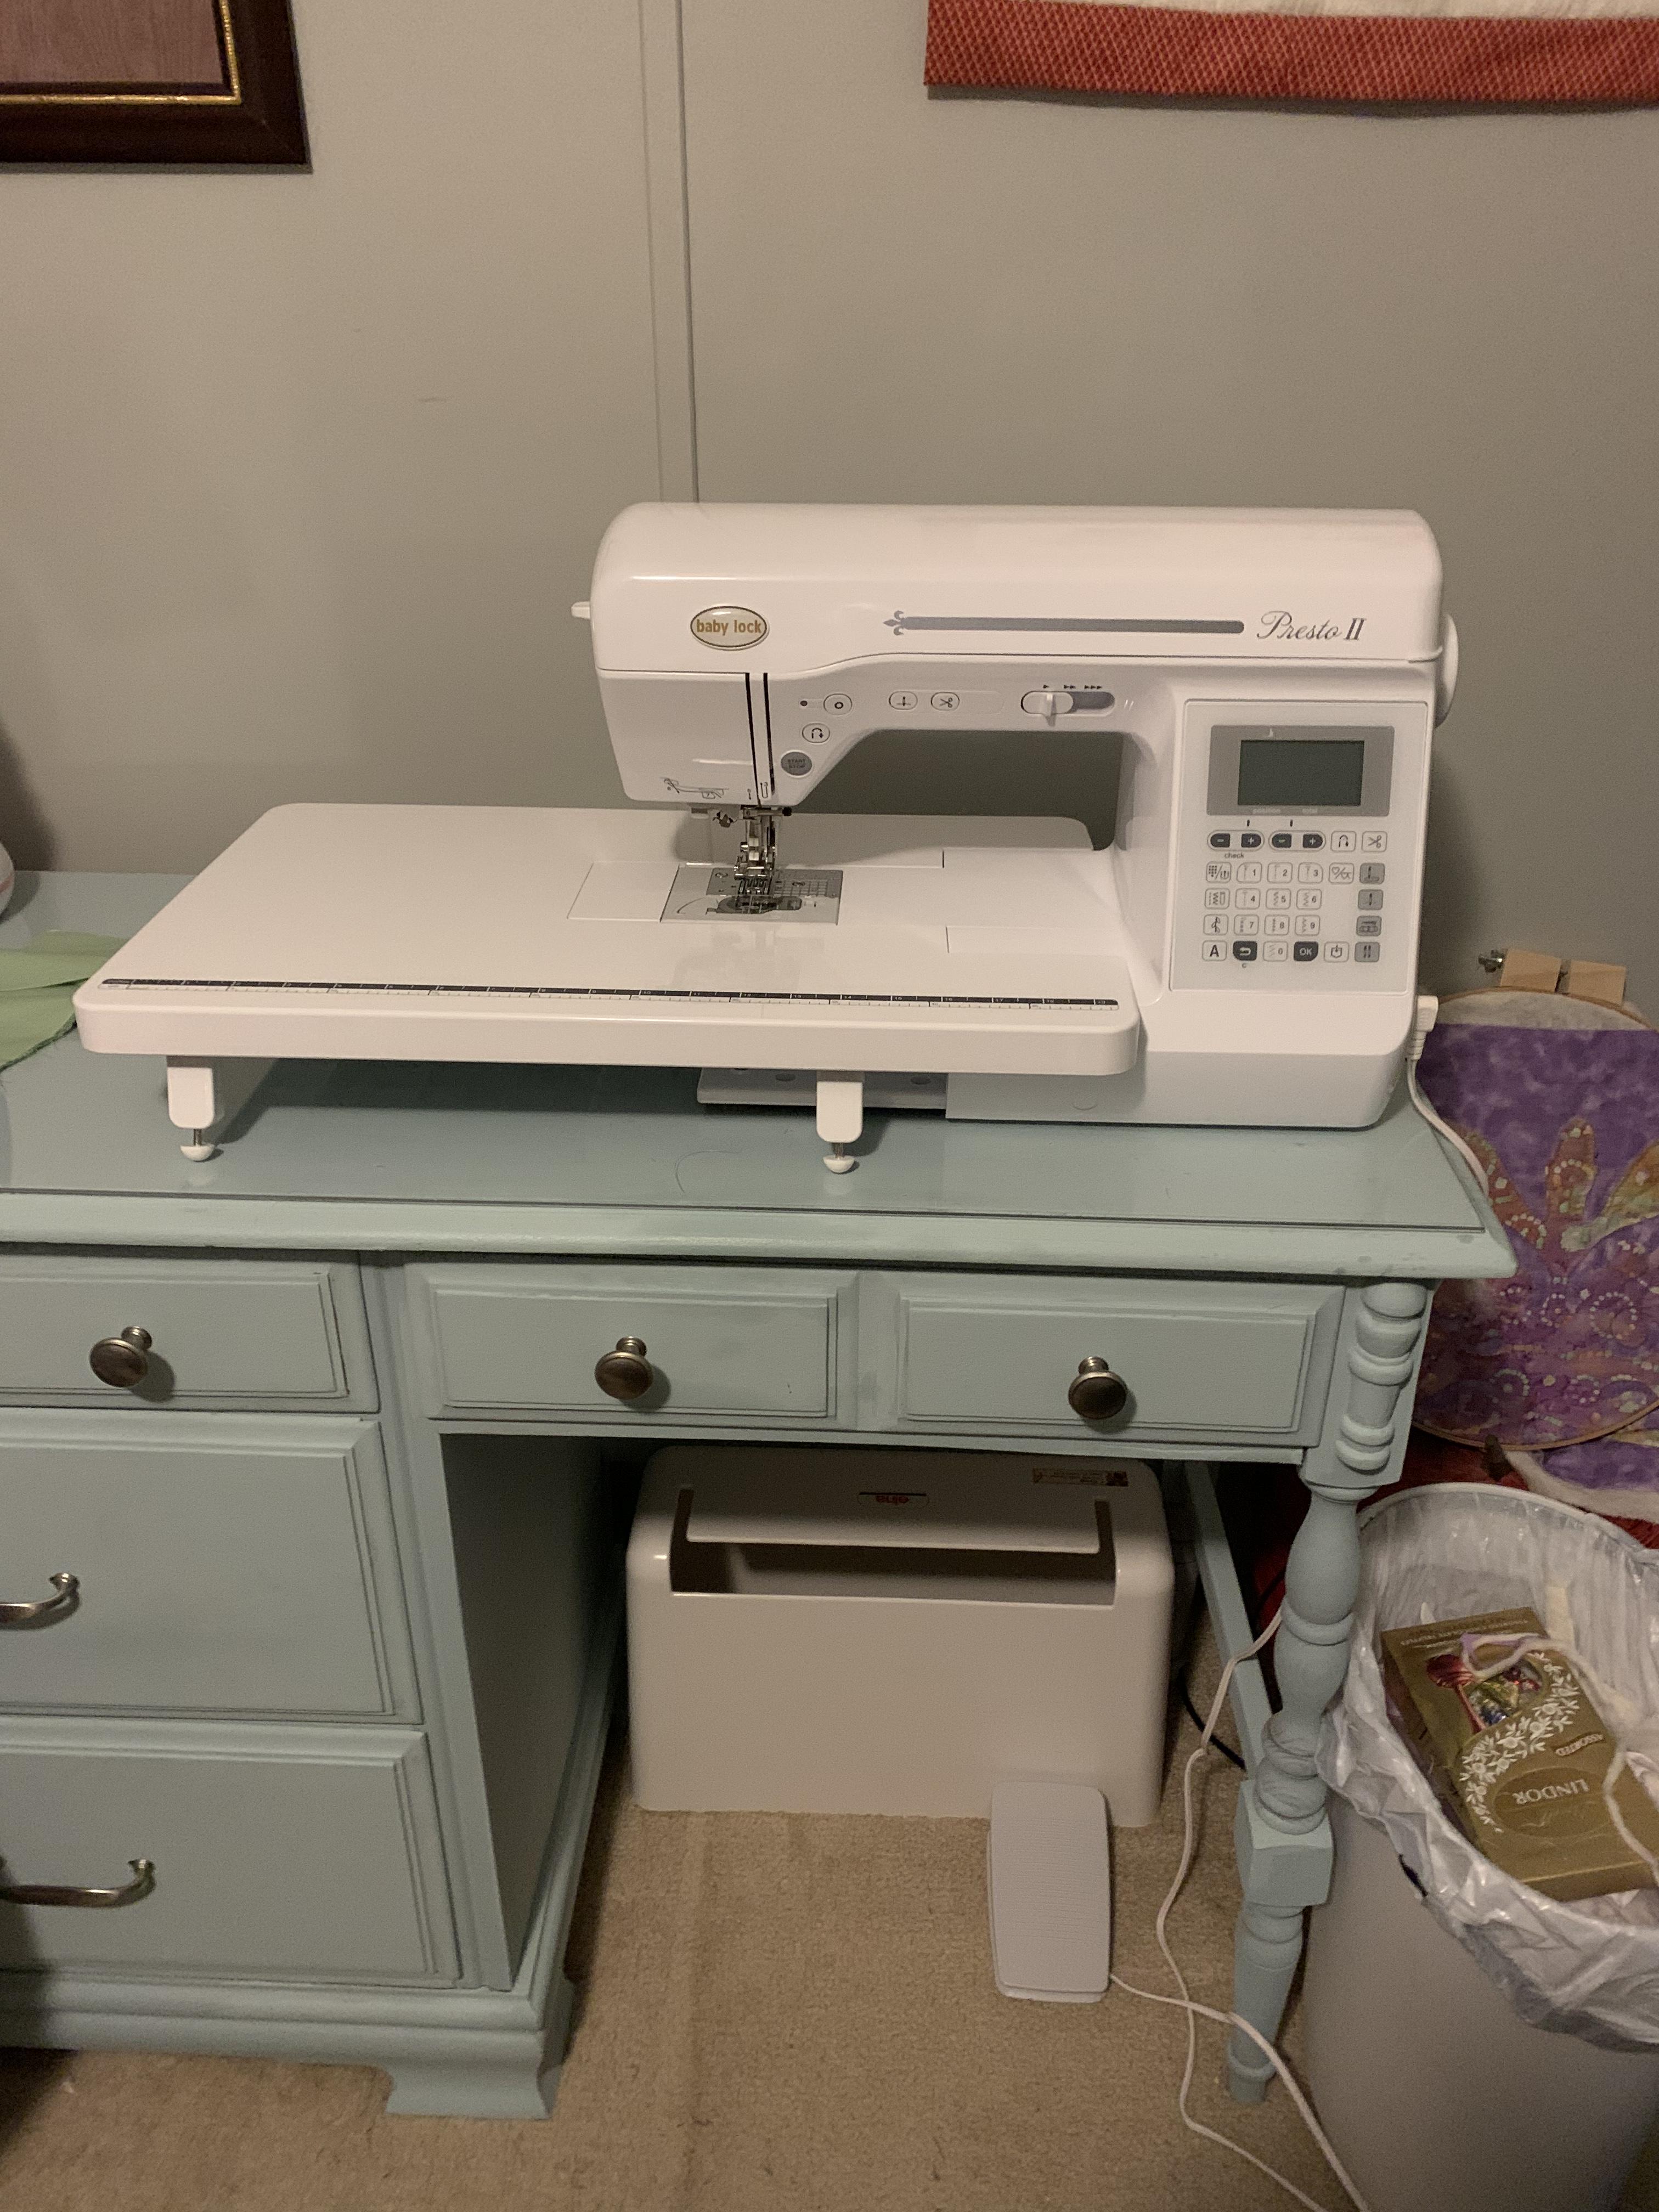 Baby Lock - Baby Lock Presto II Quilting and Sewing Machine